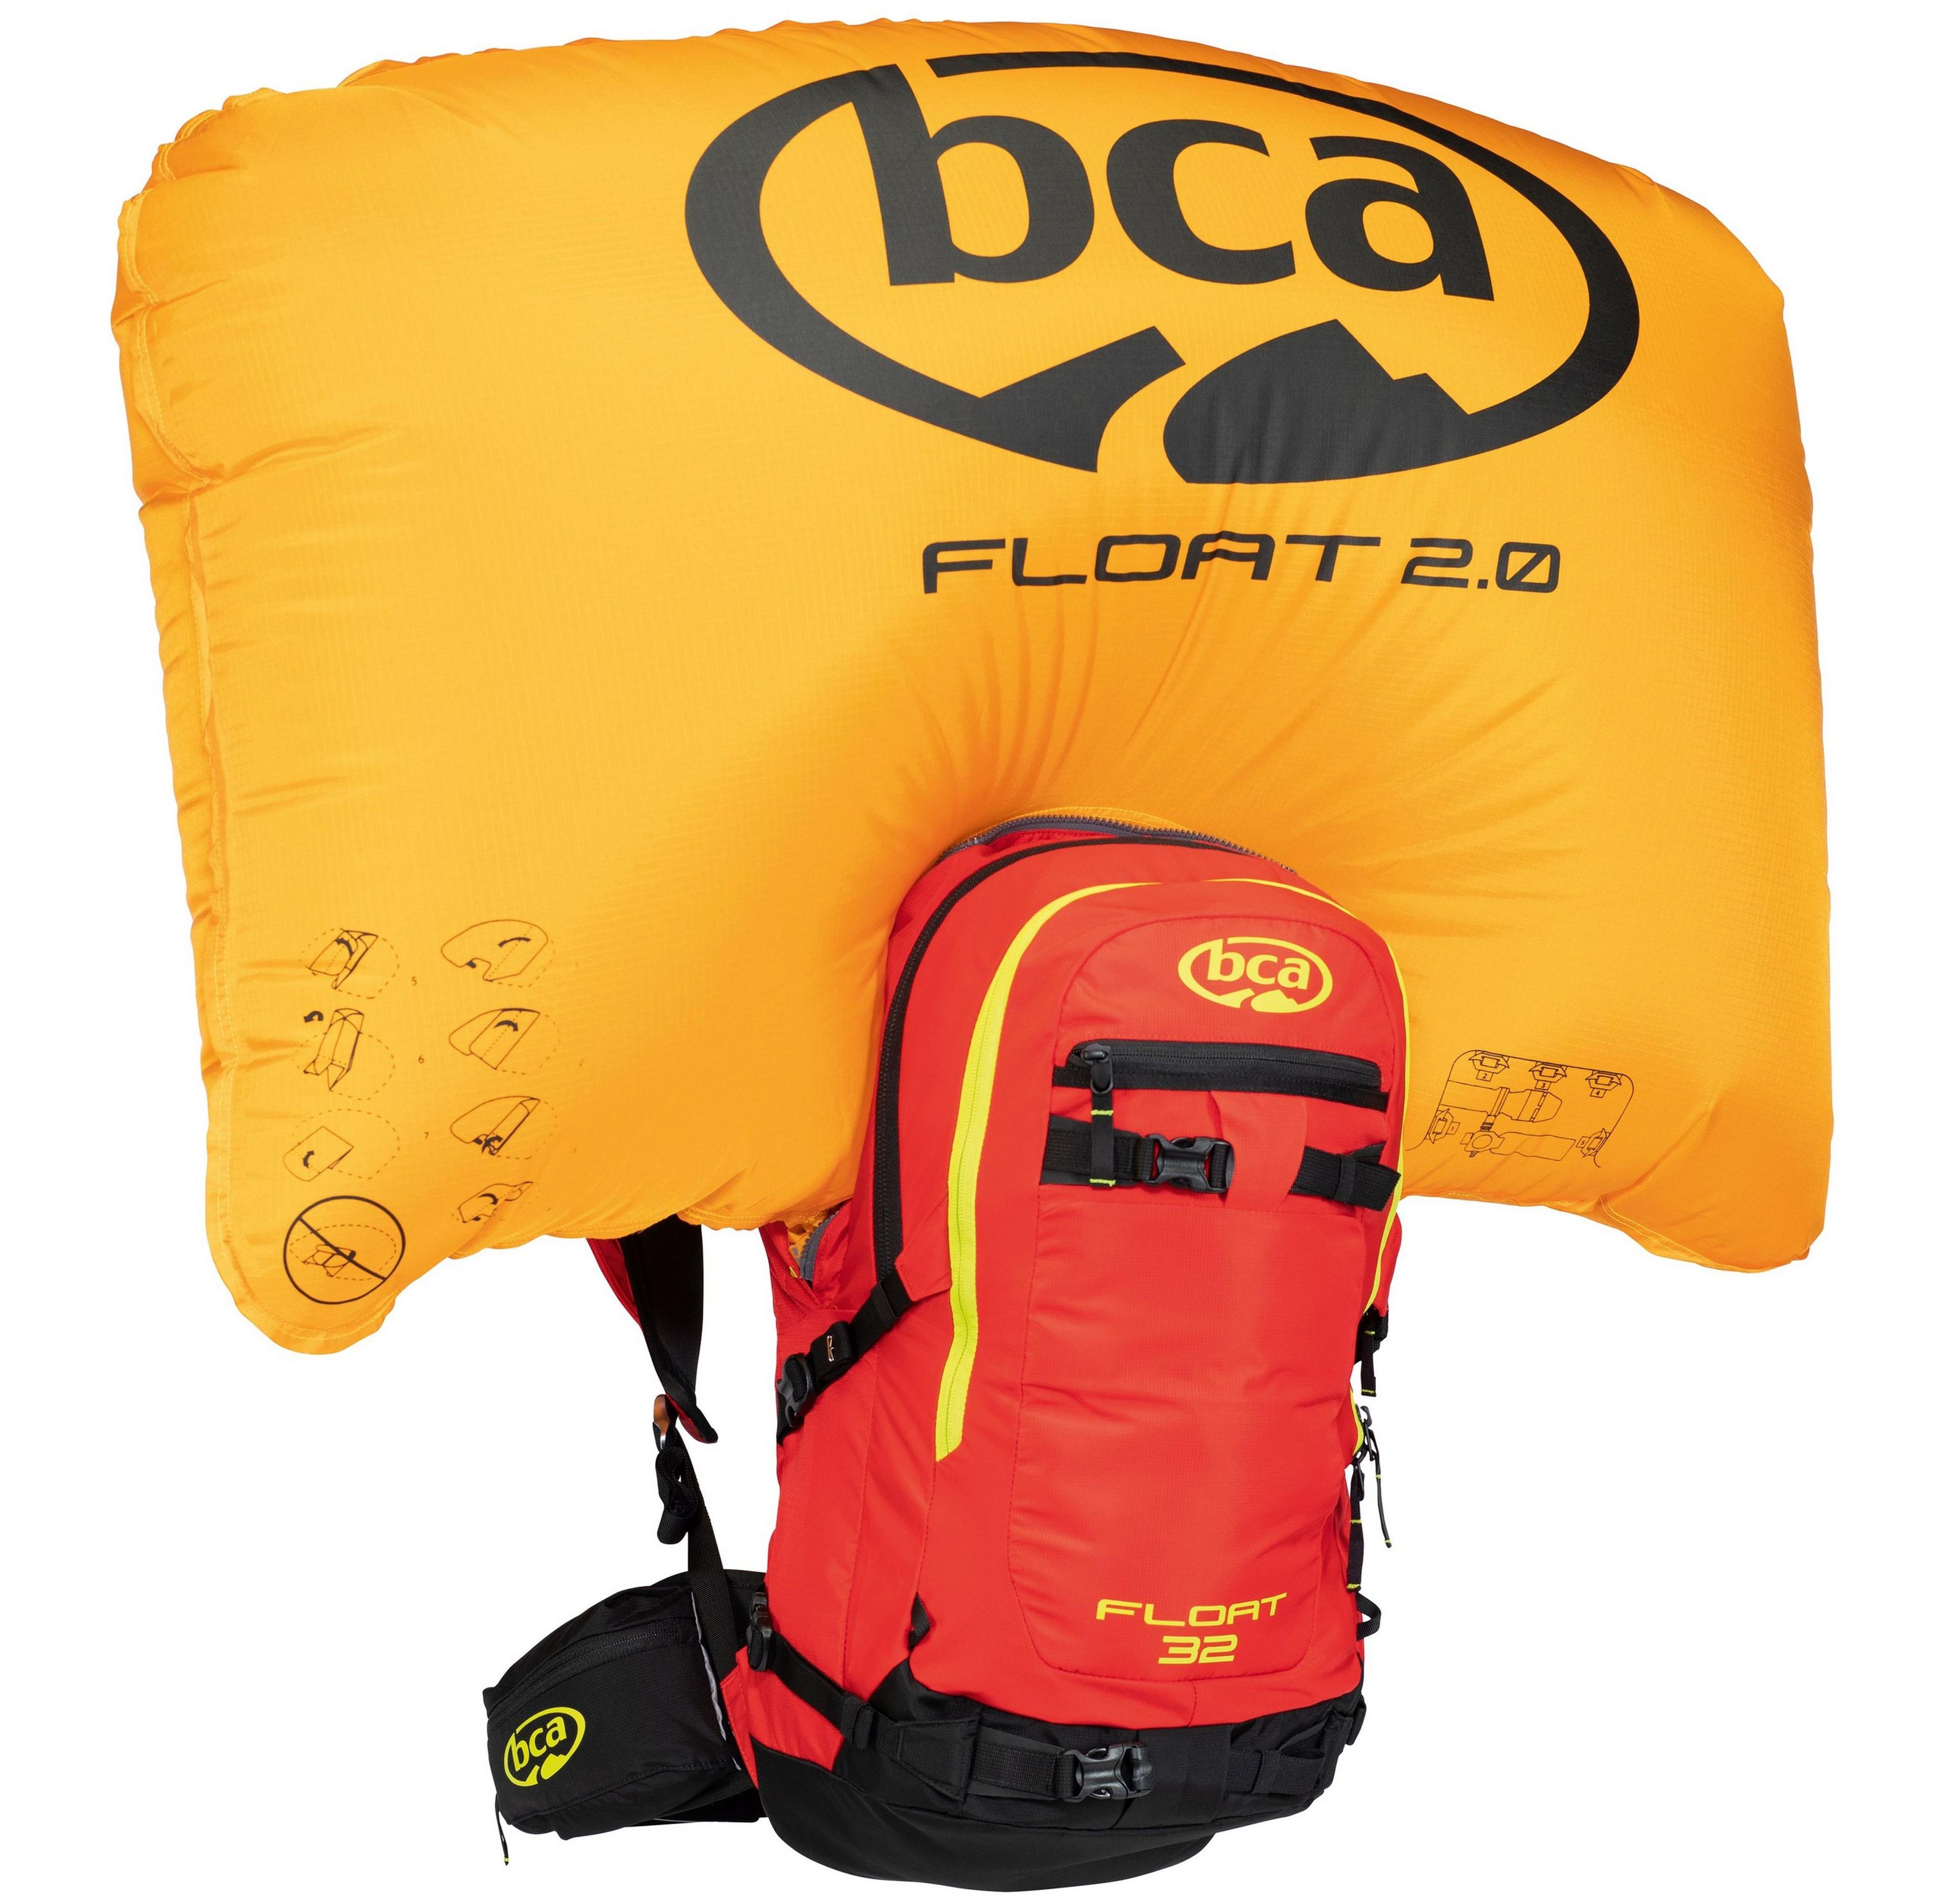 BCA avalanche airbag